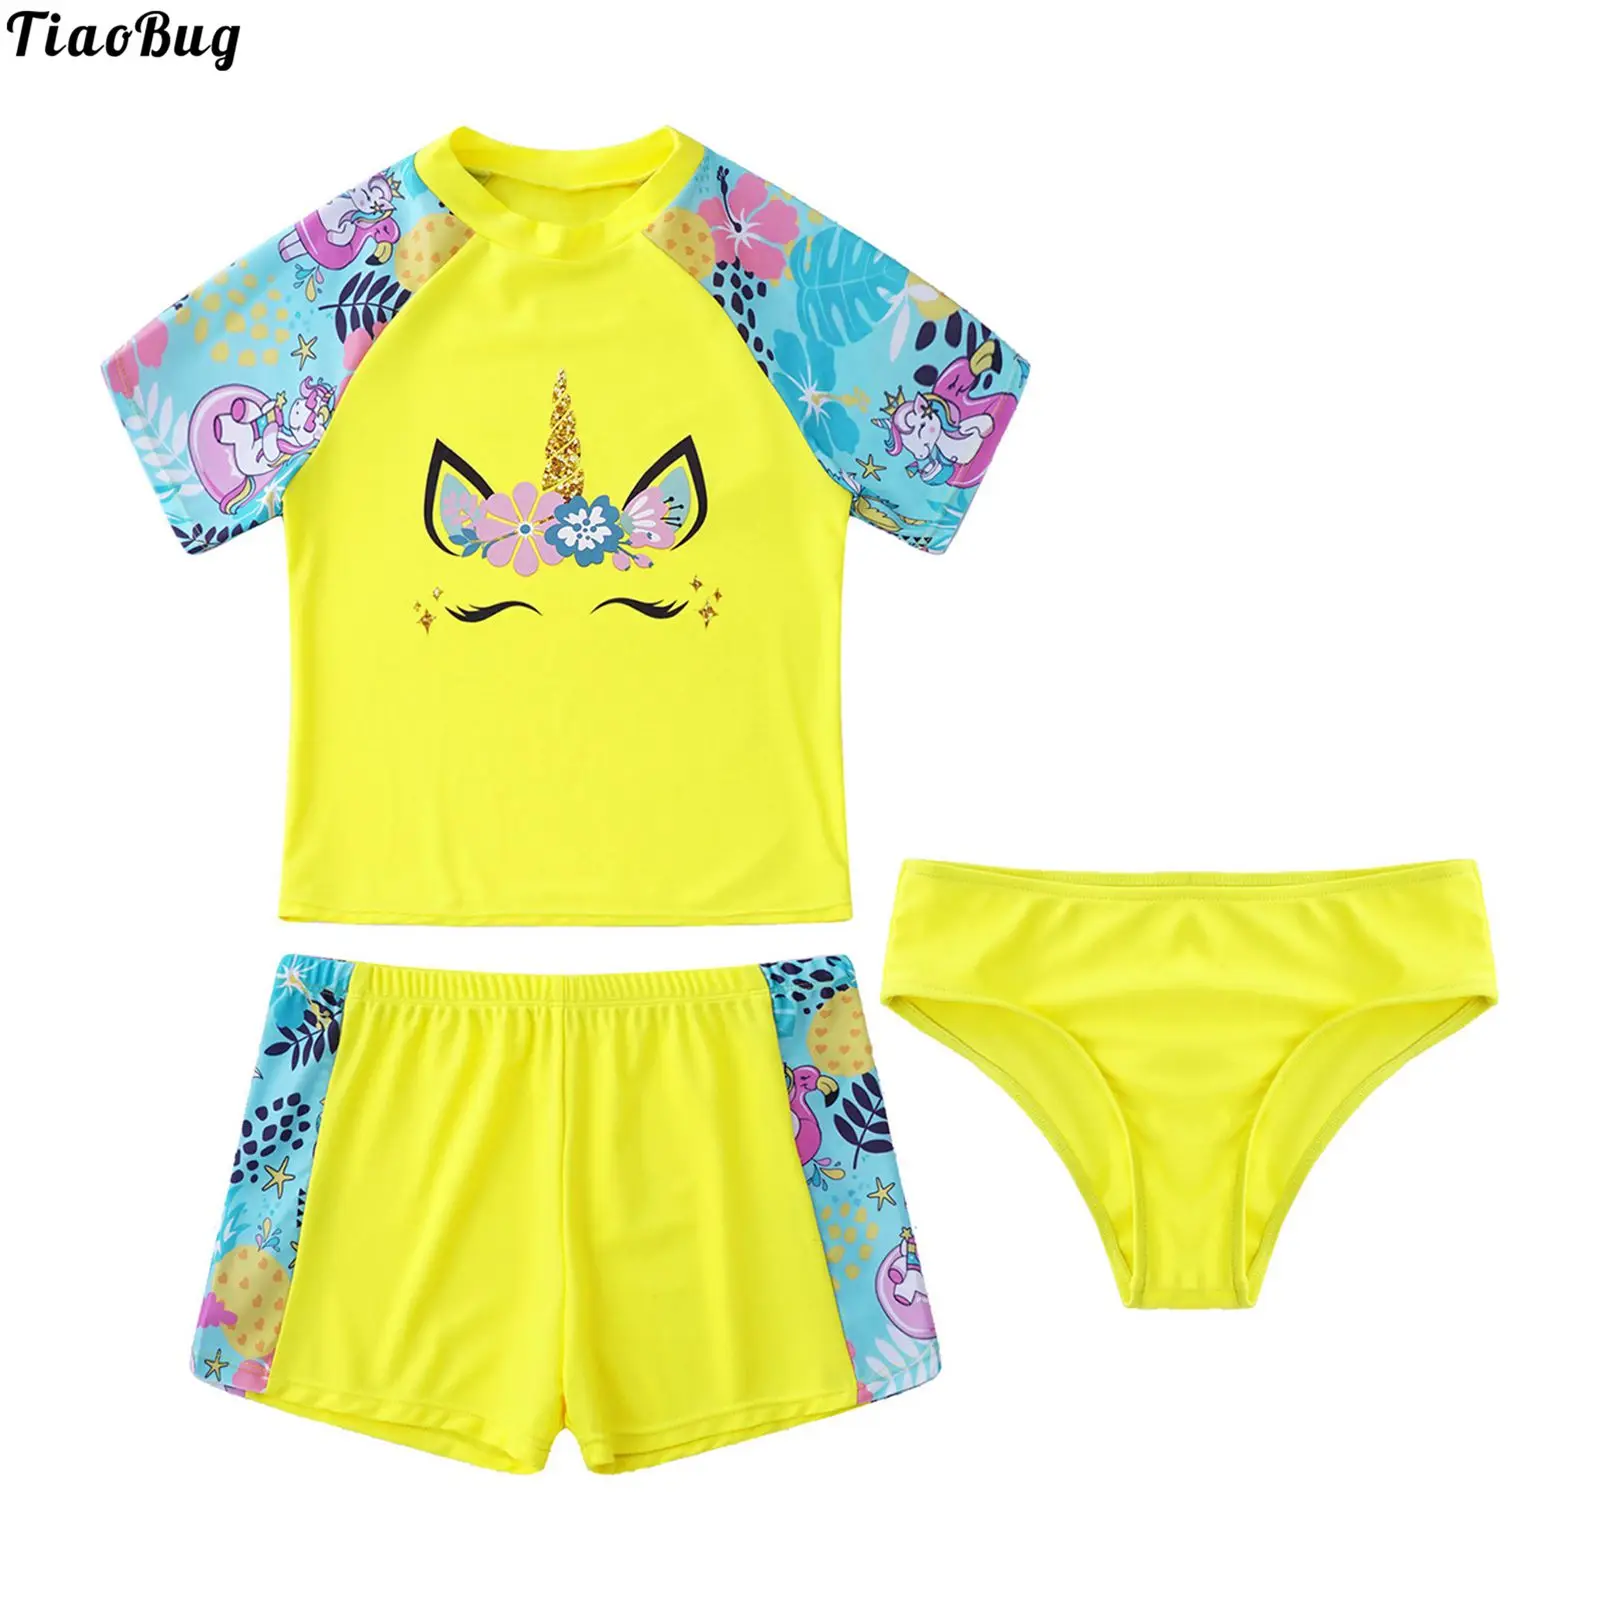 

TiaoBug 3Pcs Kids Girls Stand Collar Short Sleeves Cartoon Print Tops With Shorts And Briefs Set Pool Swimming Bathing Rashguard